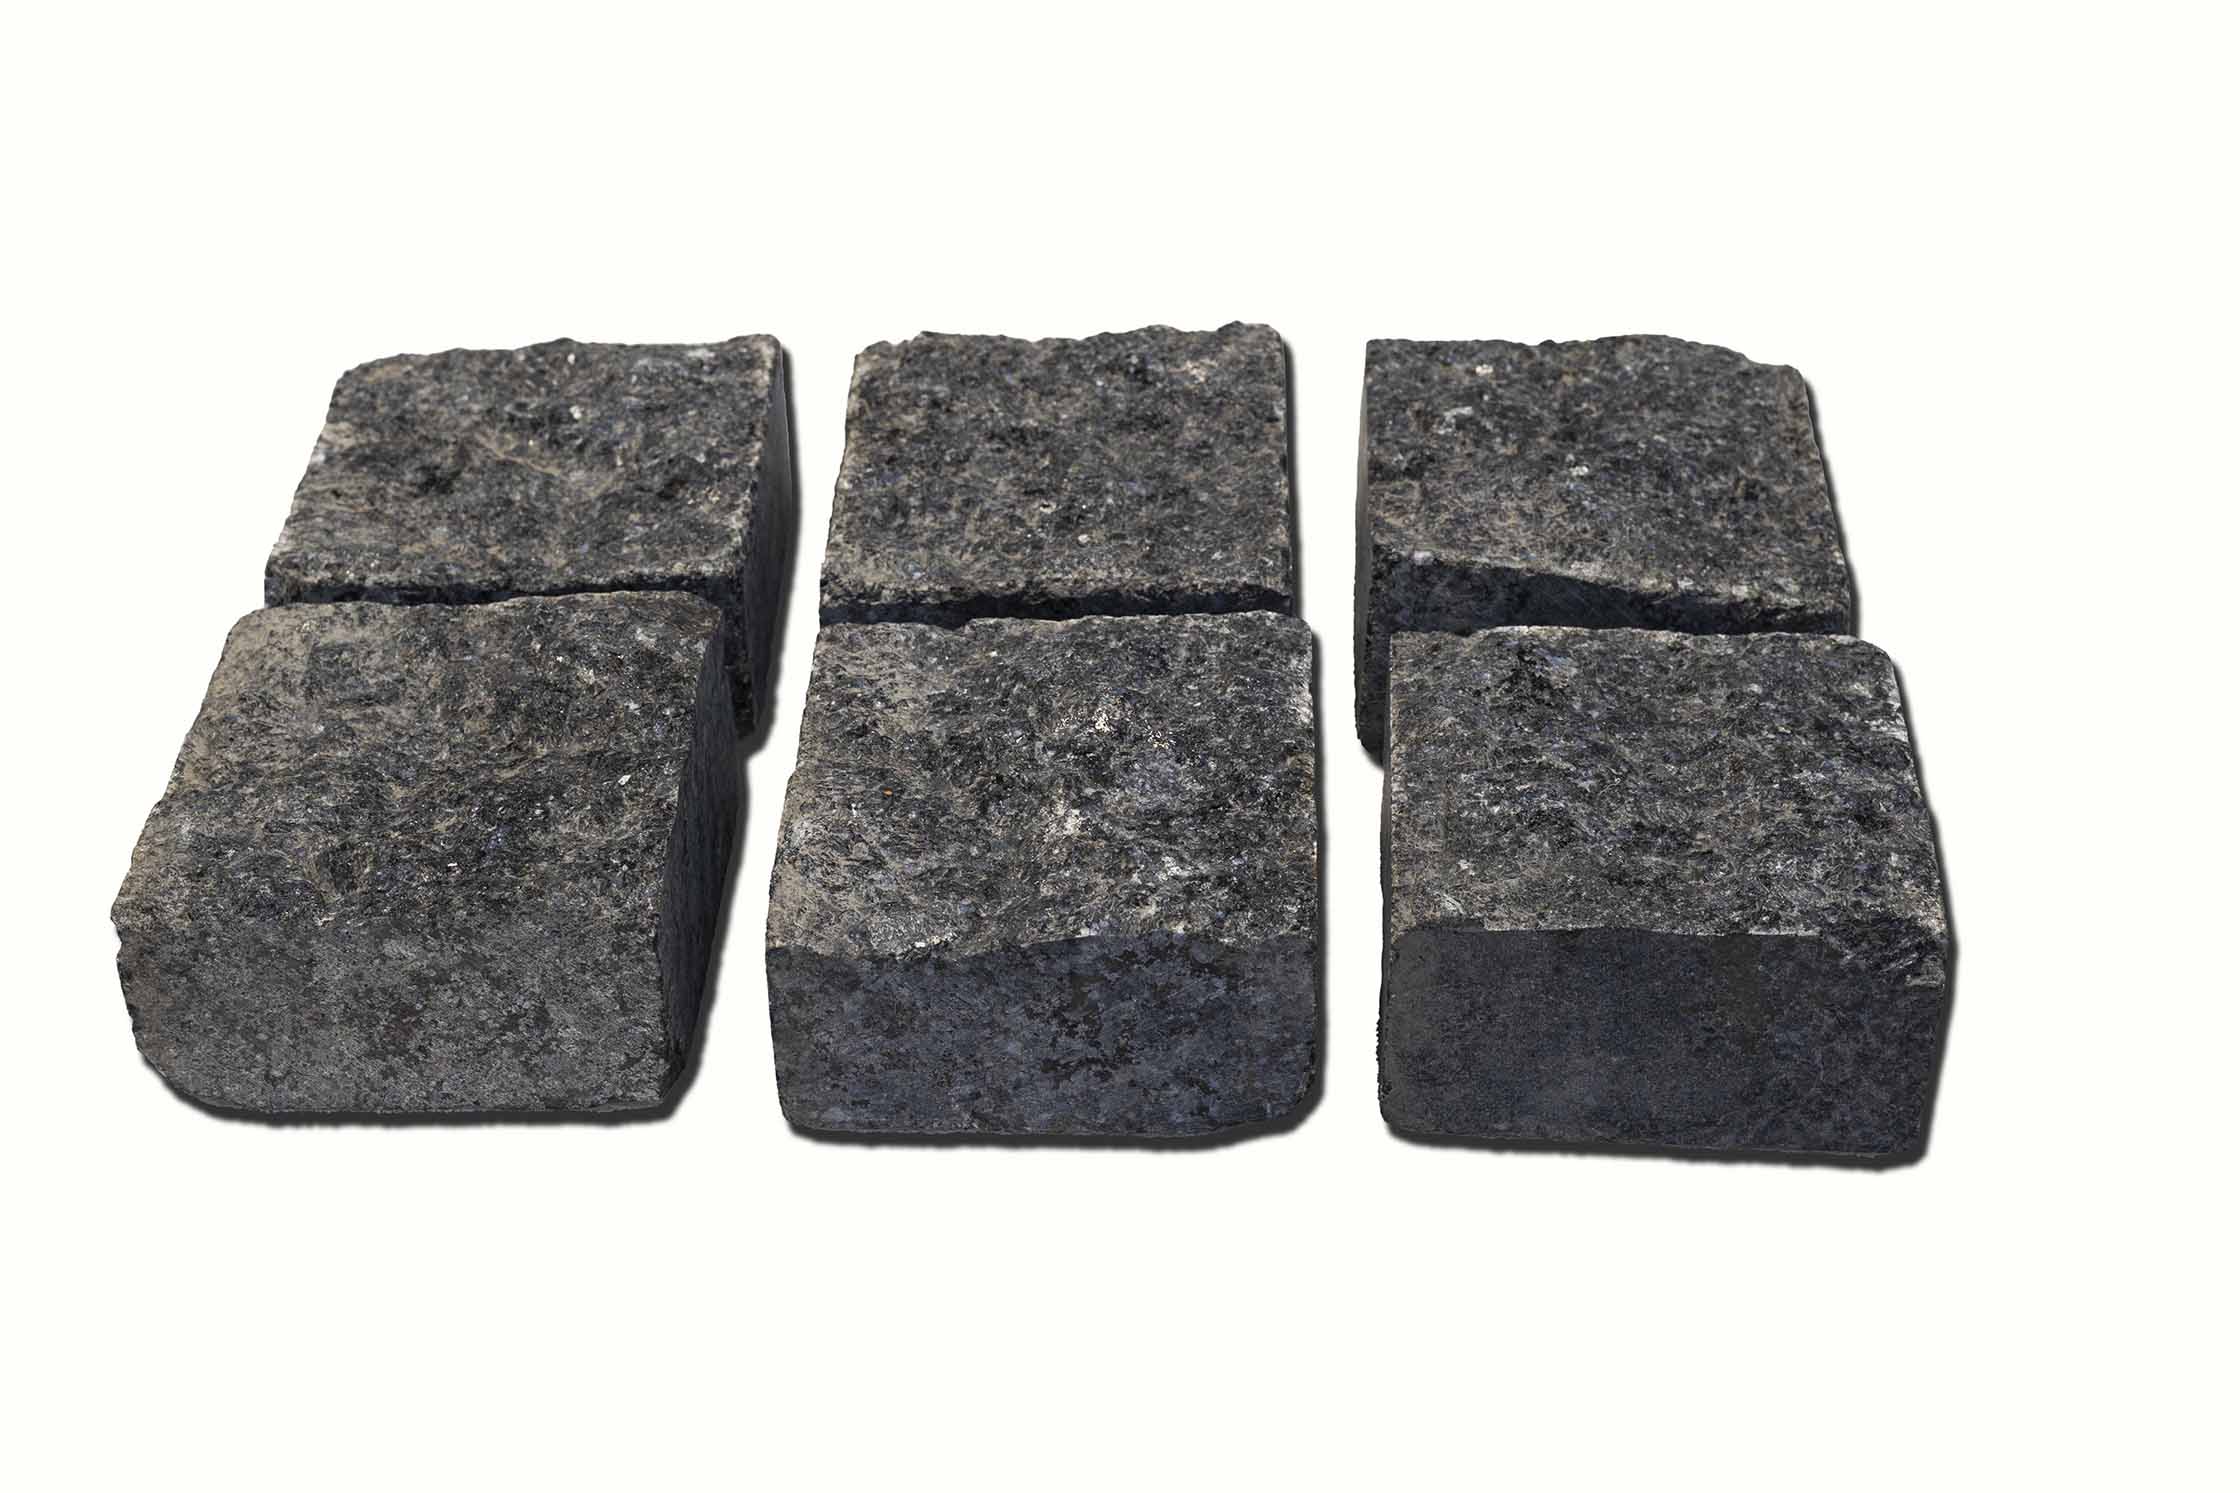 Rajasthan black top natural cobbles